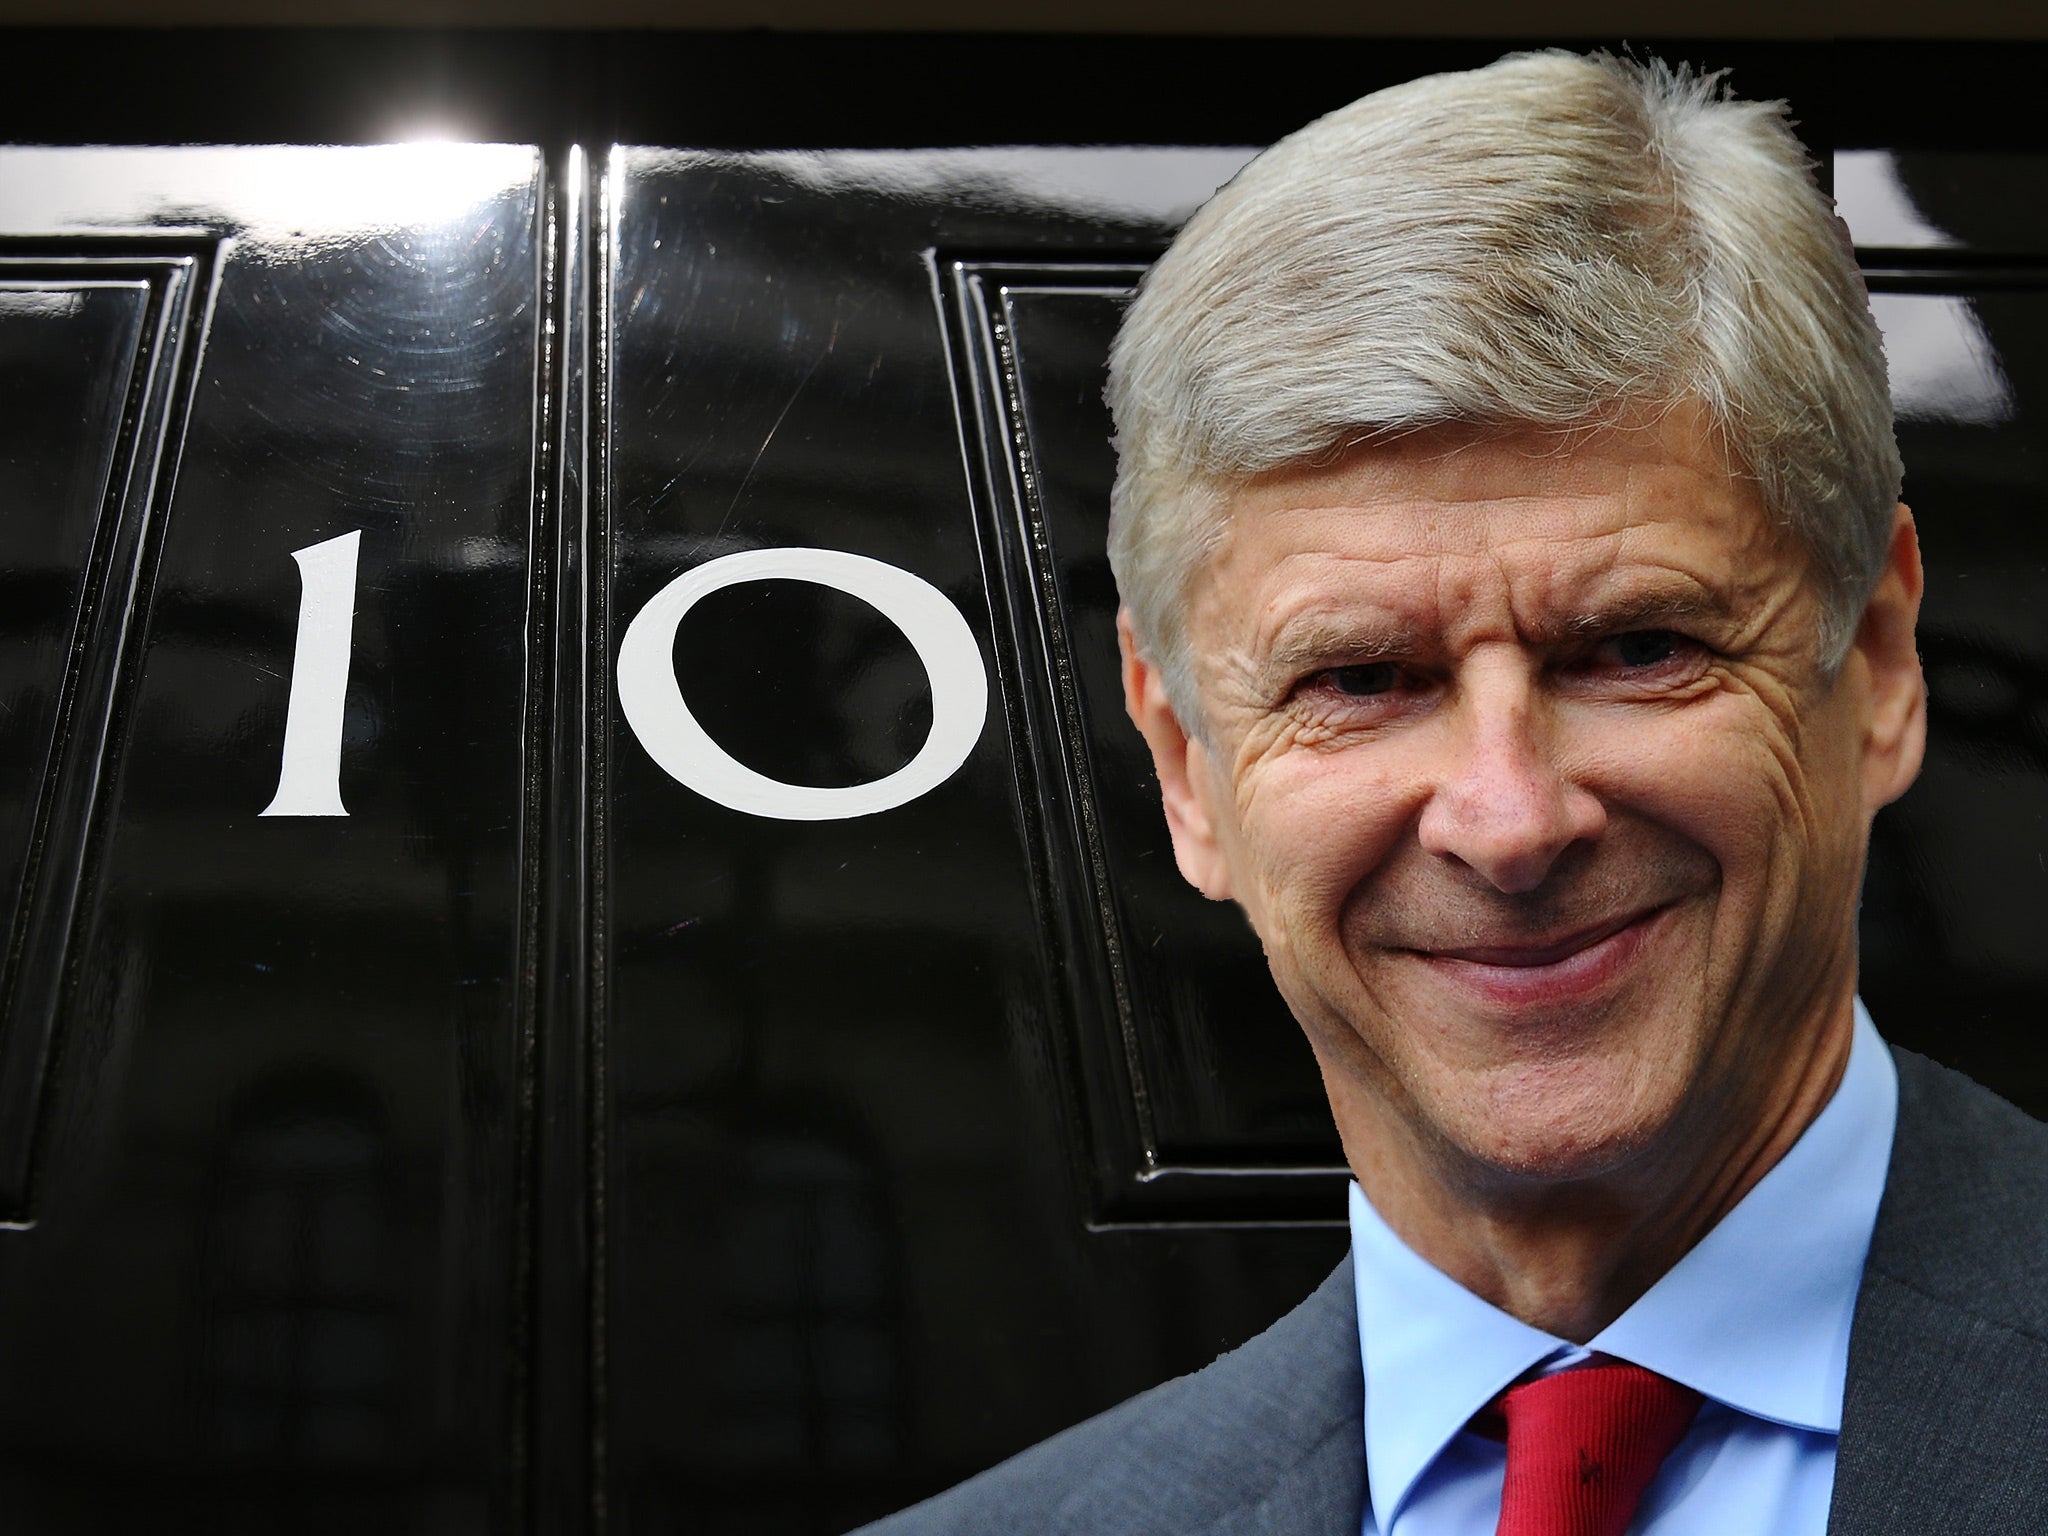 Arsene Wenger is the British public's preferred choice despite his struggles at Arsenal